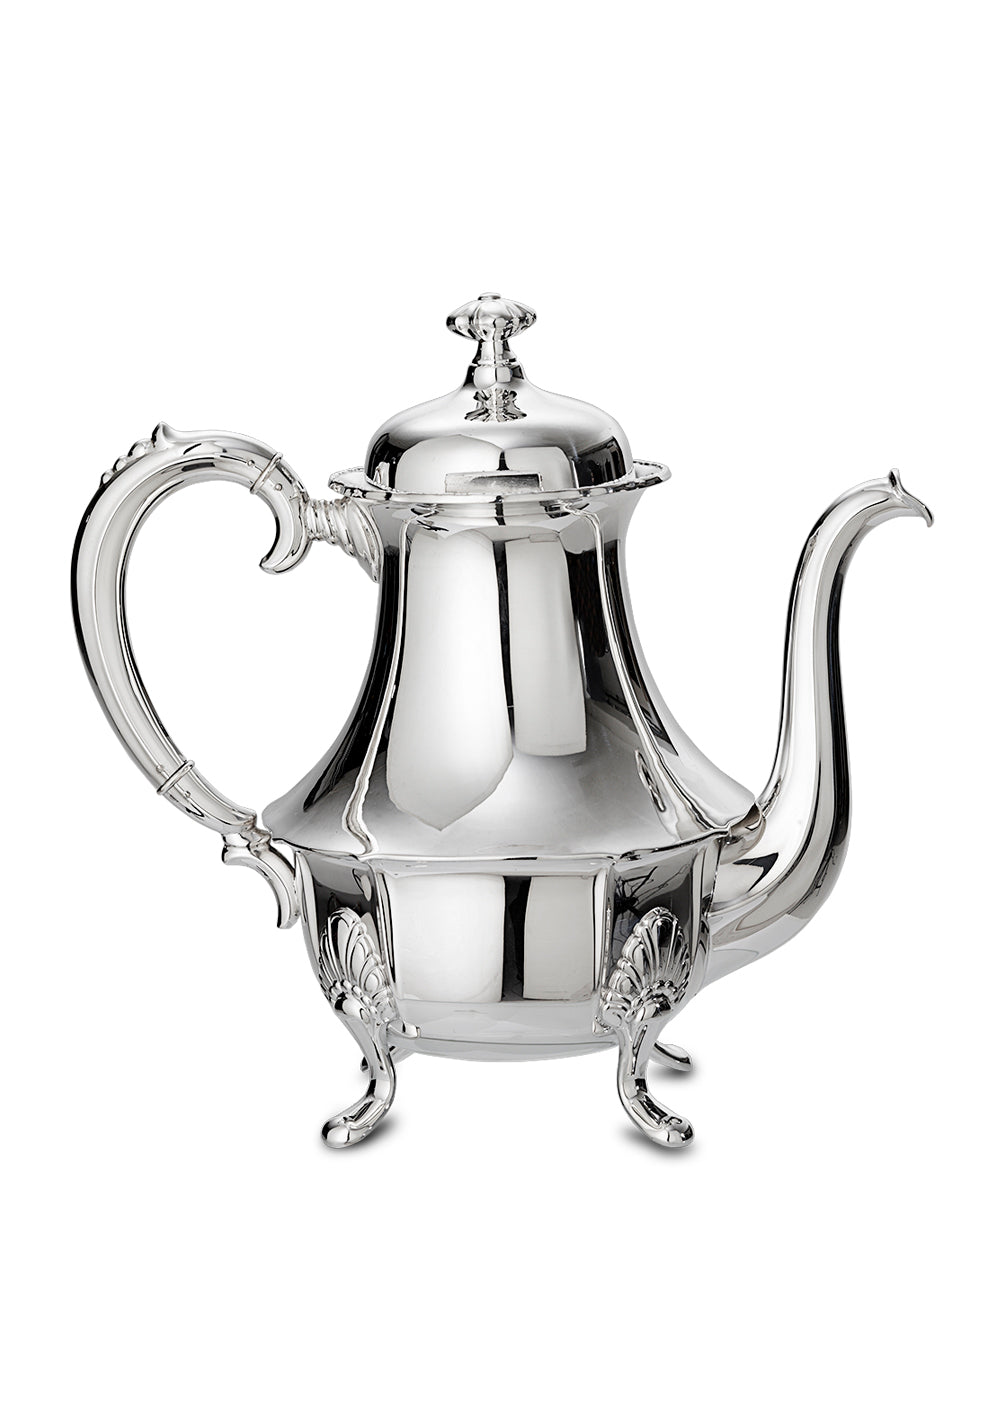 Coffee pot in silver